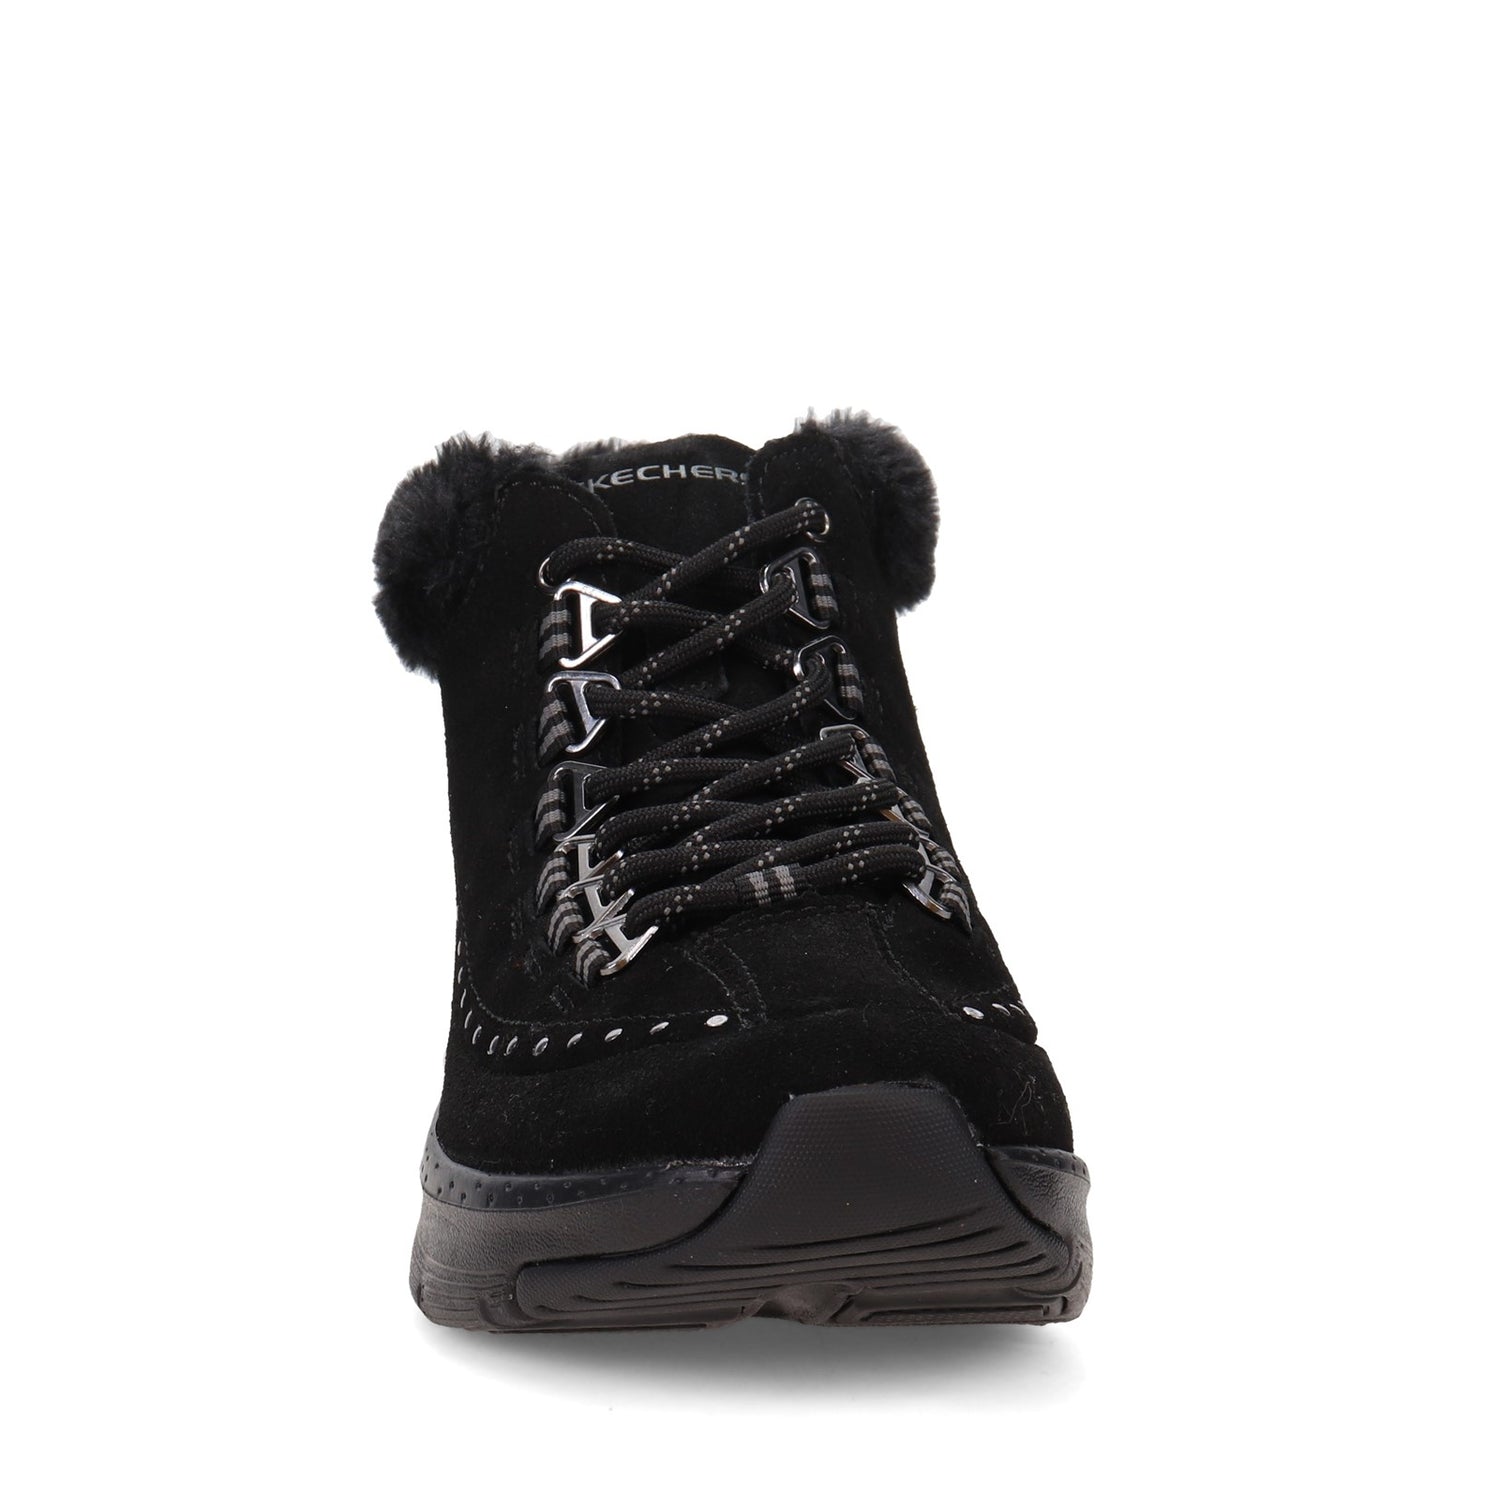 Peltz Shoes  Women's Skechers Arch Fit - Goodnight Boot Black 167325-BBK